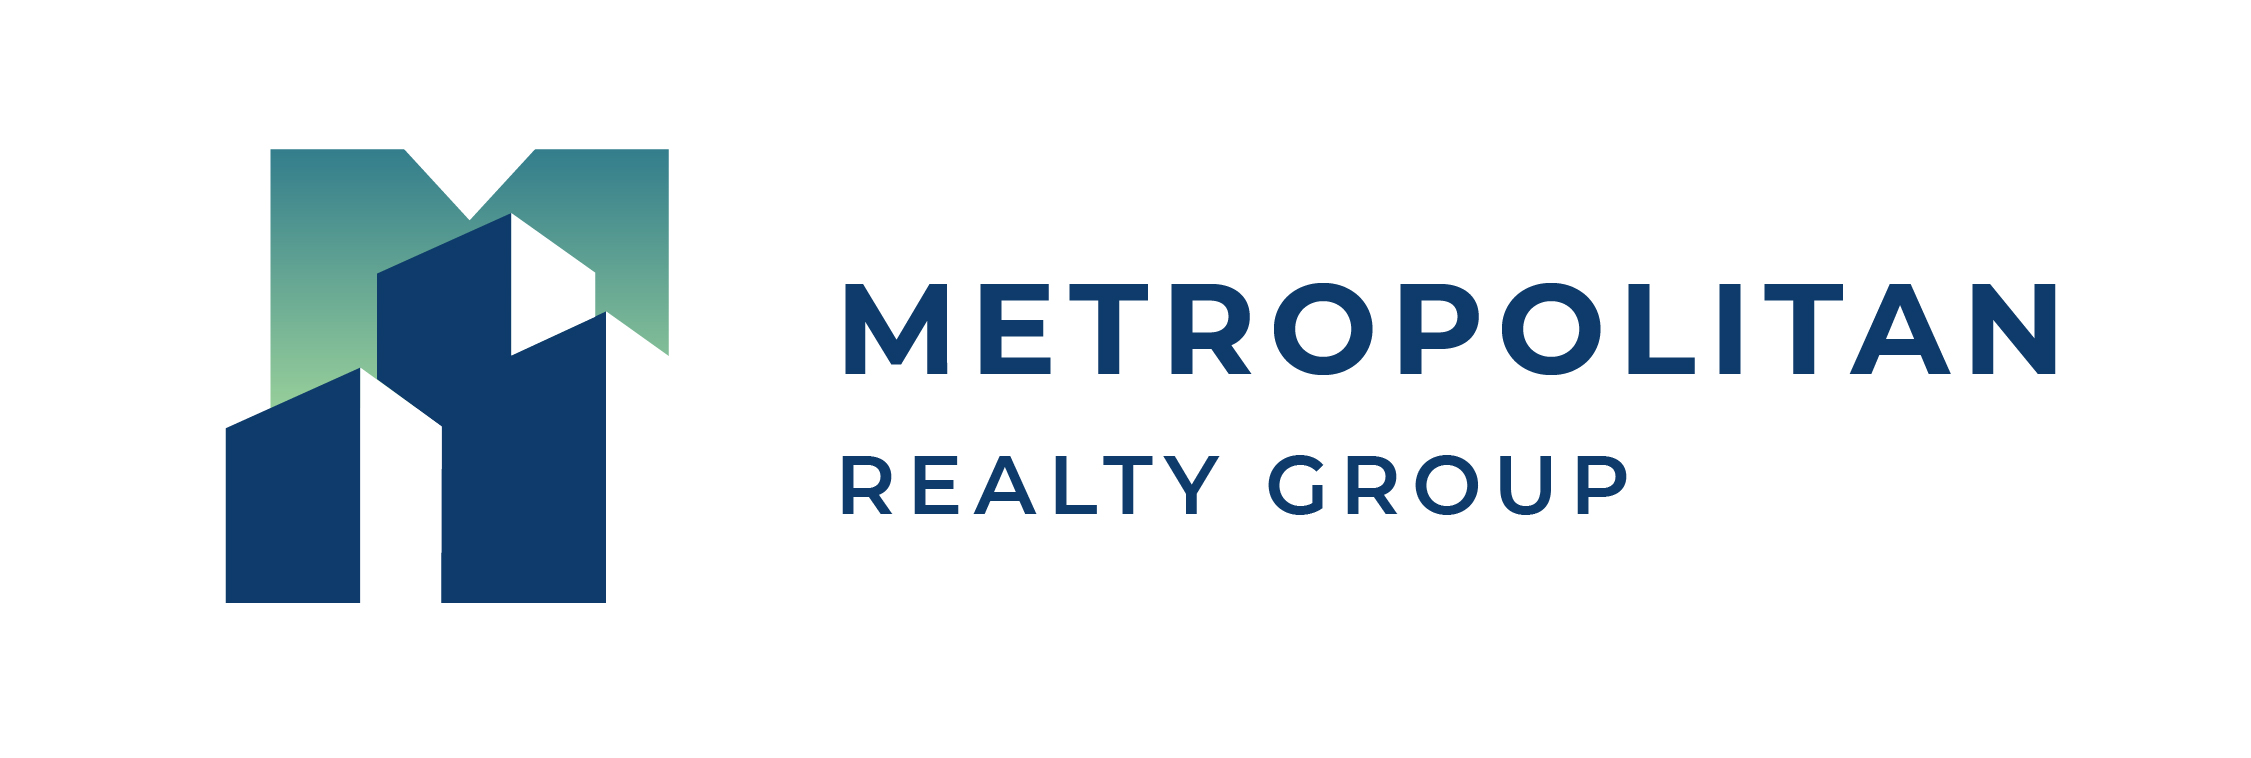 Metropolitan Realty Group Celebrates 20th Anniversary